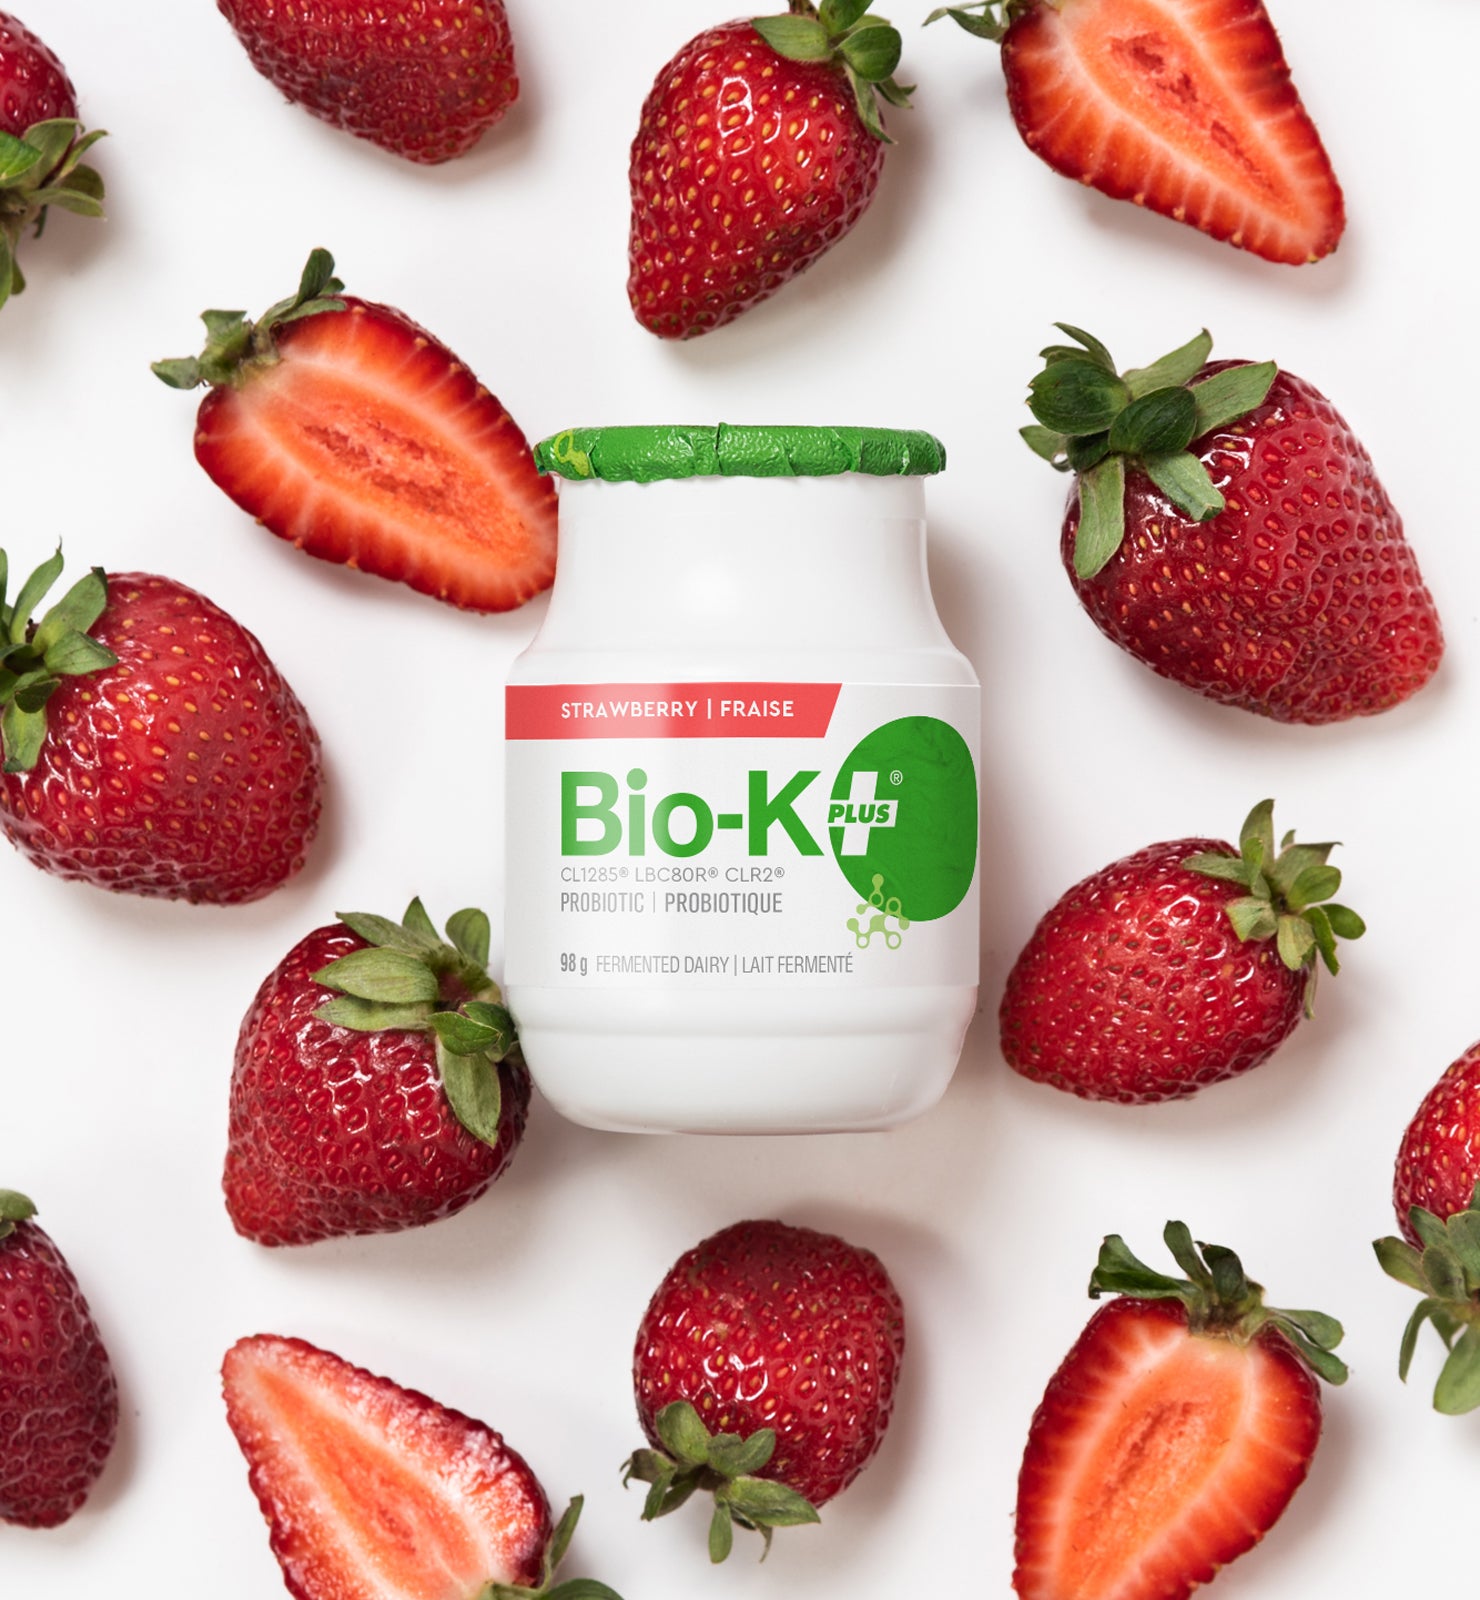 Bottle of Bio-K+ drinkable - Strawberry Flavor